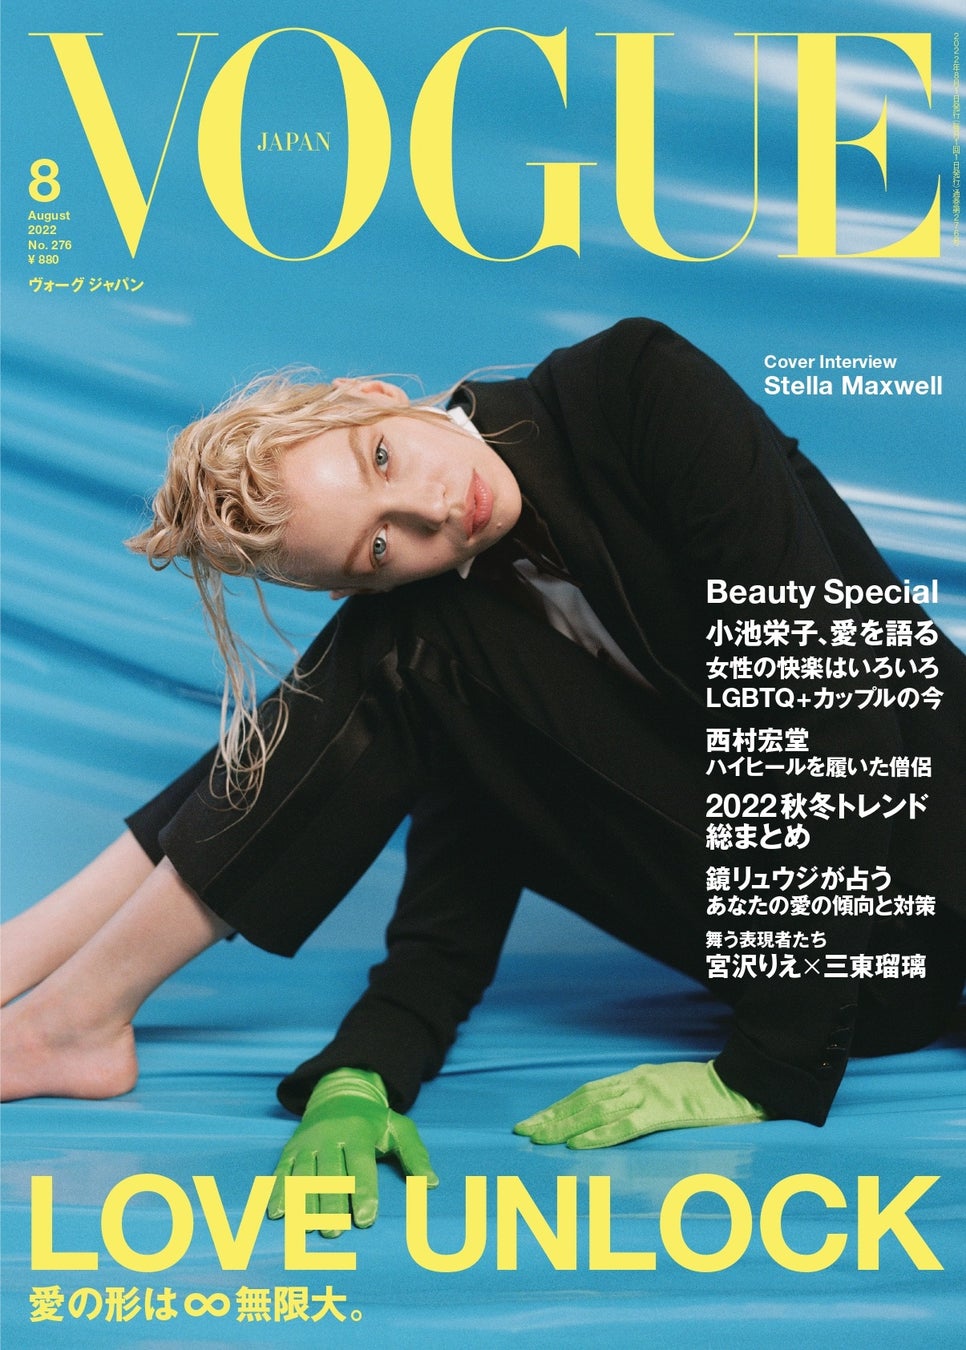 『VOGUE JAPAN』8月号（7月1日発売）「LOVE UNLOCK」愛の形は∞無限大。ステラ・マックスウェルが表紙を飾る。宮沢りえ×三東瑠璃 ダンス動画も。のサブ画像1_『VOGUE JAPAN』2022年8月号  Cover：Tanya & Zhenya Posternak © 2022 Condé Nast Japan. All rights reserved.